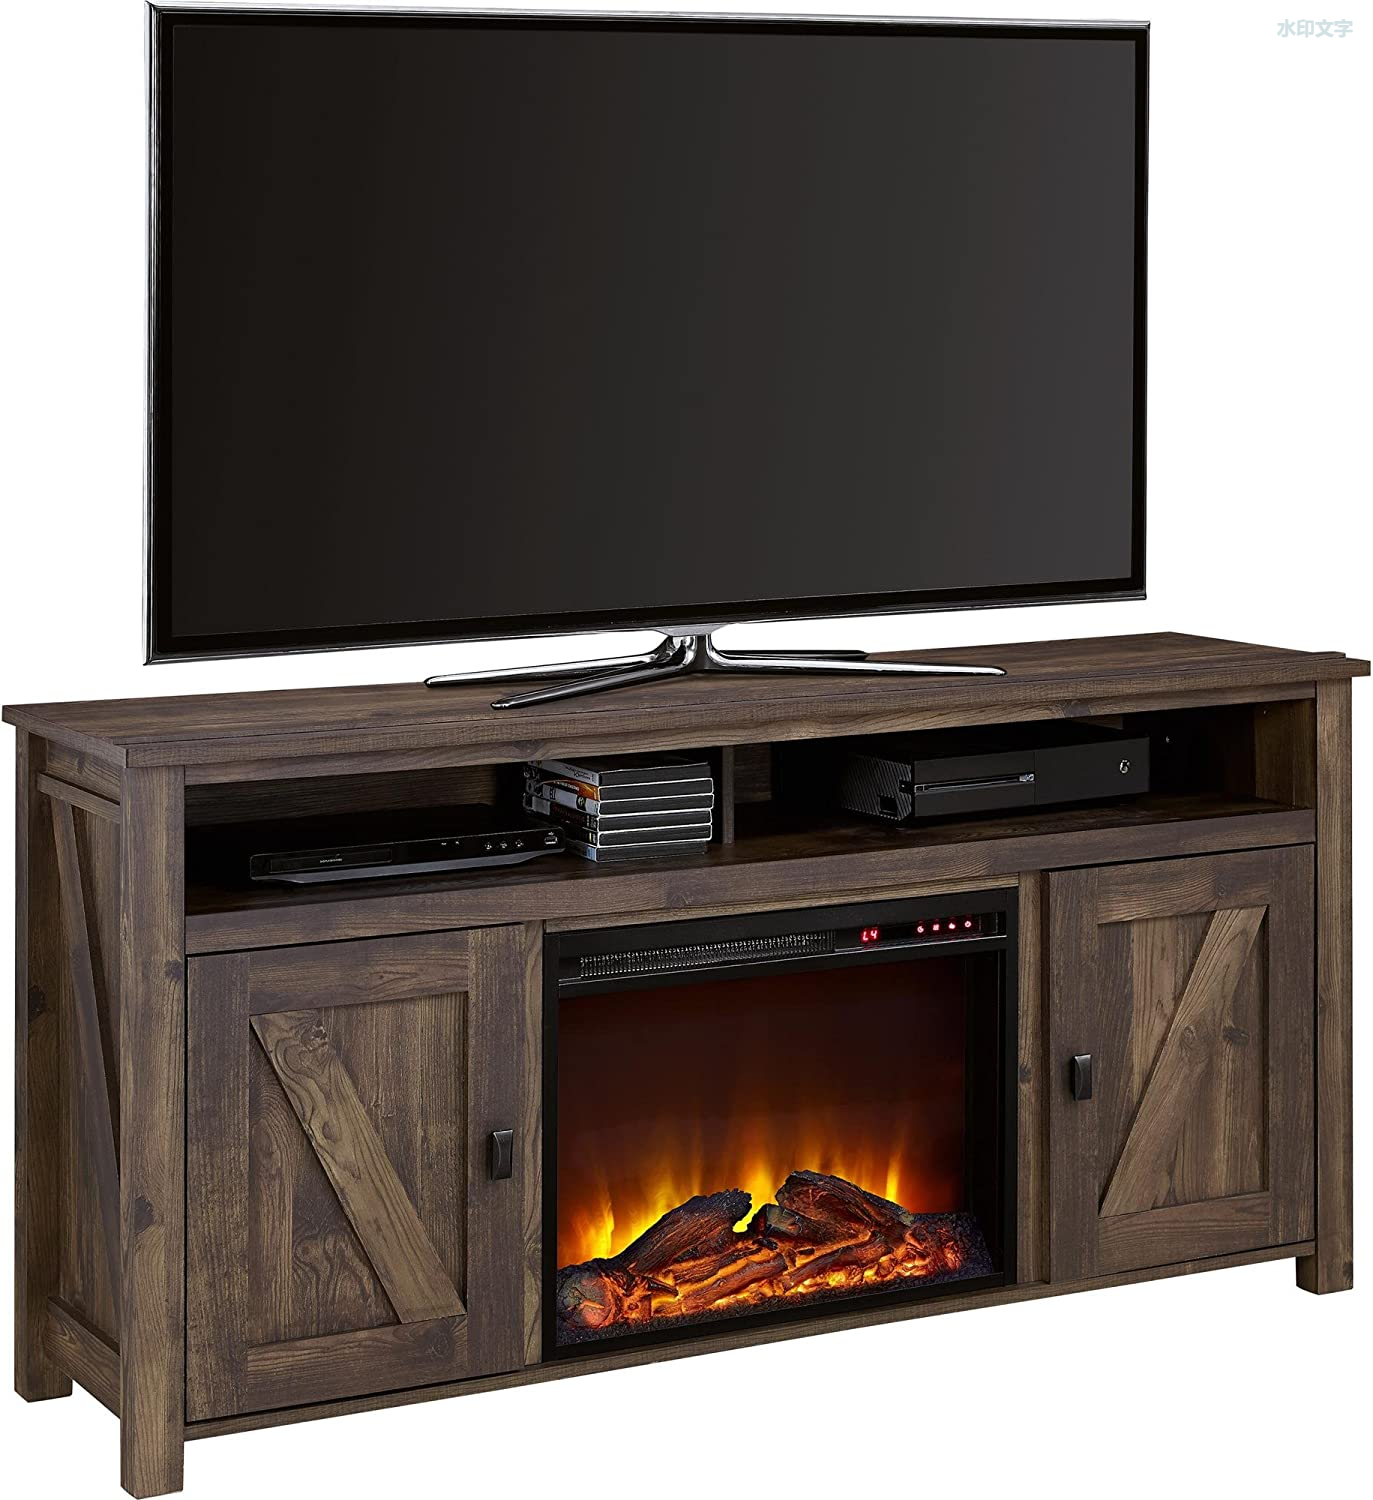 Consola de TV con chimenea eléctrica Farmington de Ameriwood Home para televisores de hasta 60'